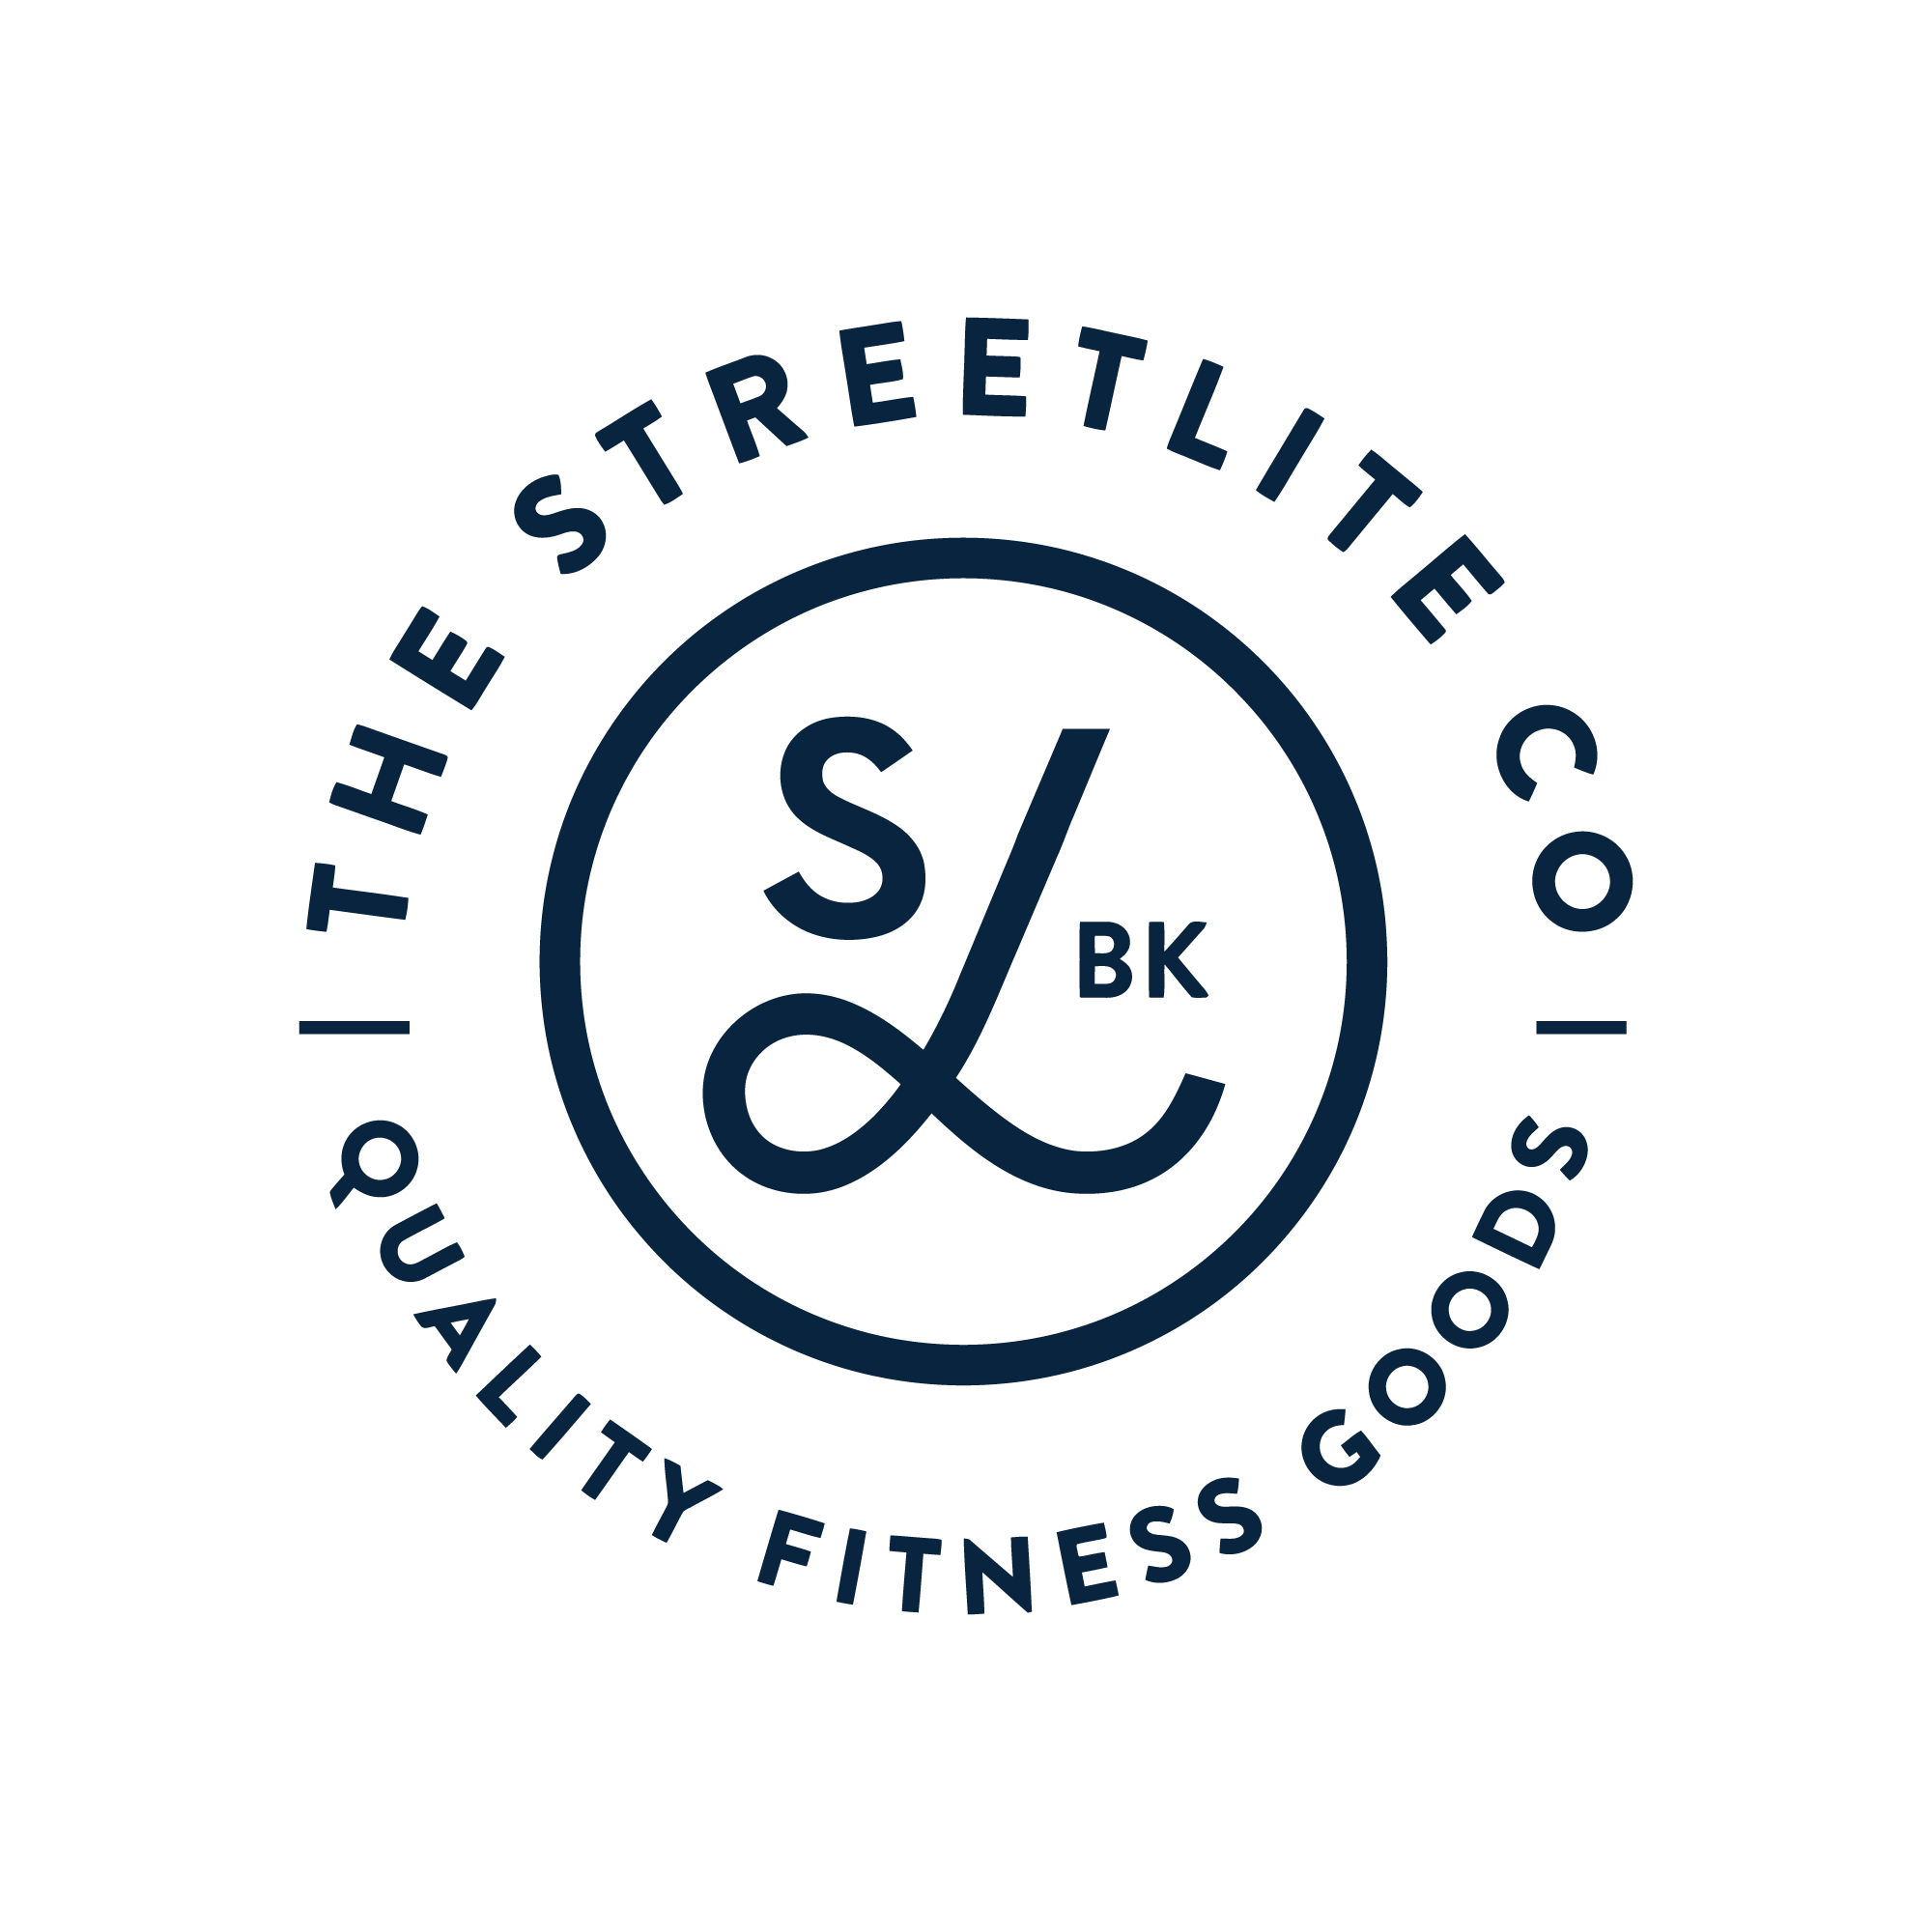 The StreetLite Company